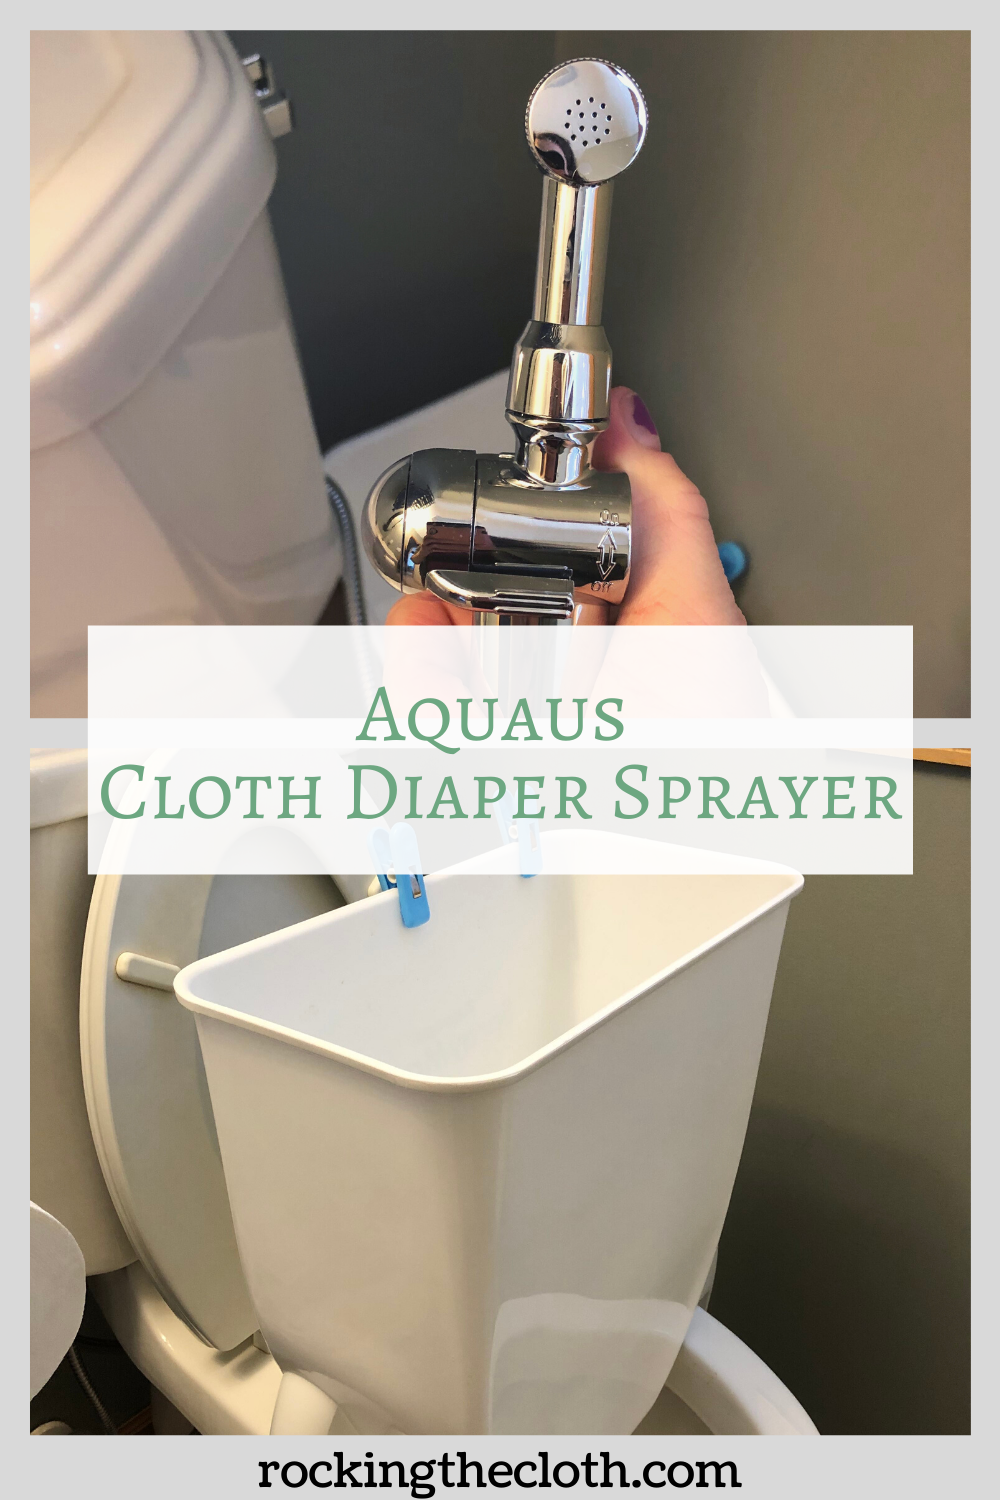 Aquaus Cloth Diaper Sprayer – The Perfect Spraying System!